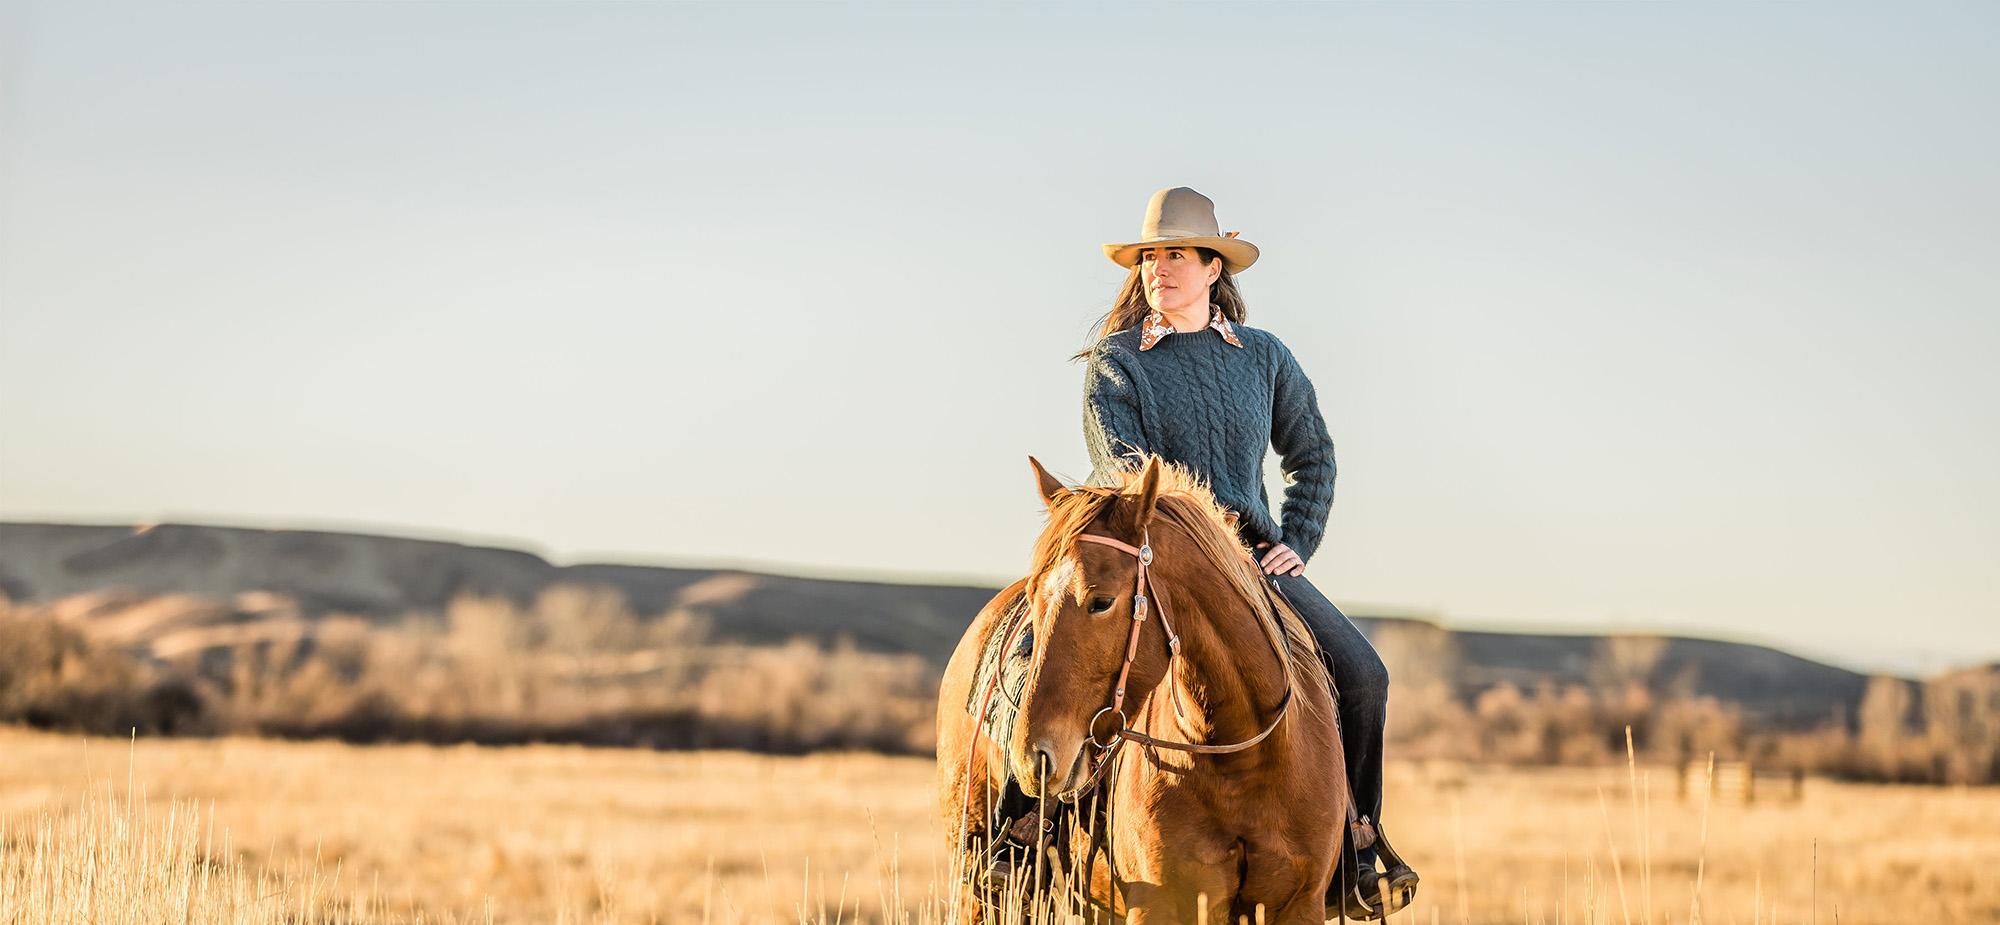 Rachel Larsen on horseback wearing cowboy hat